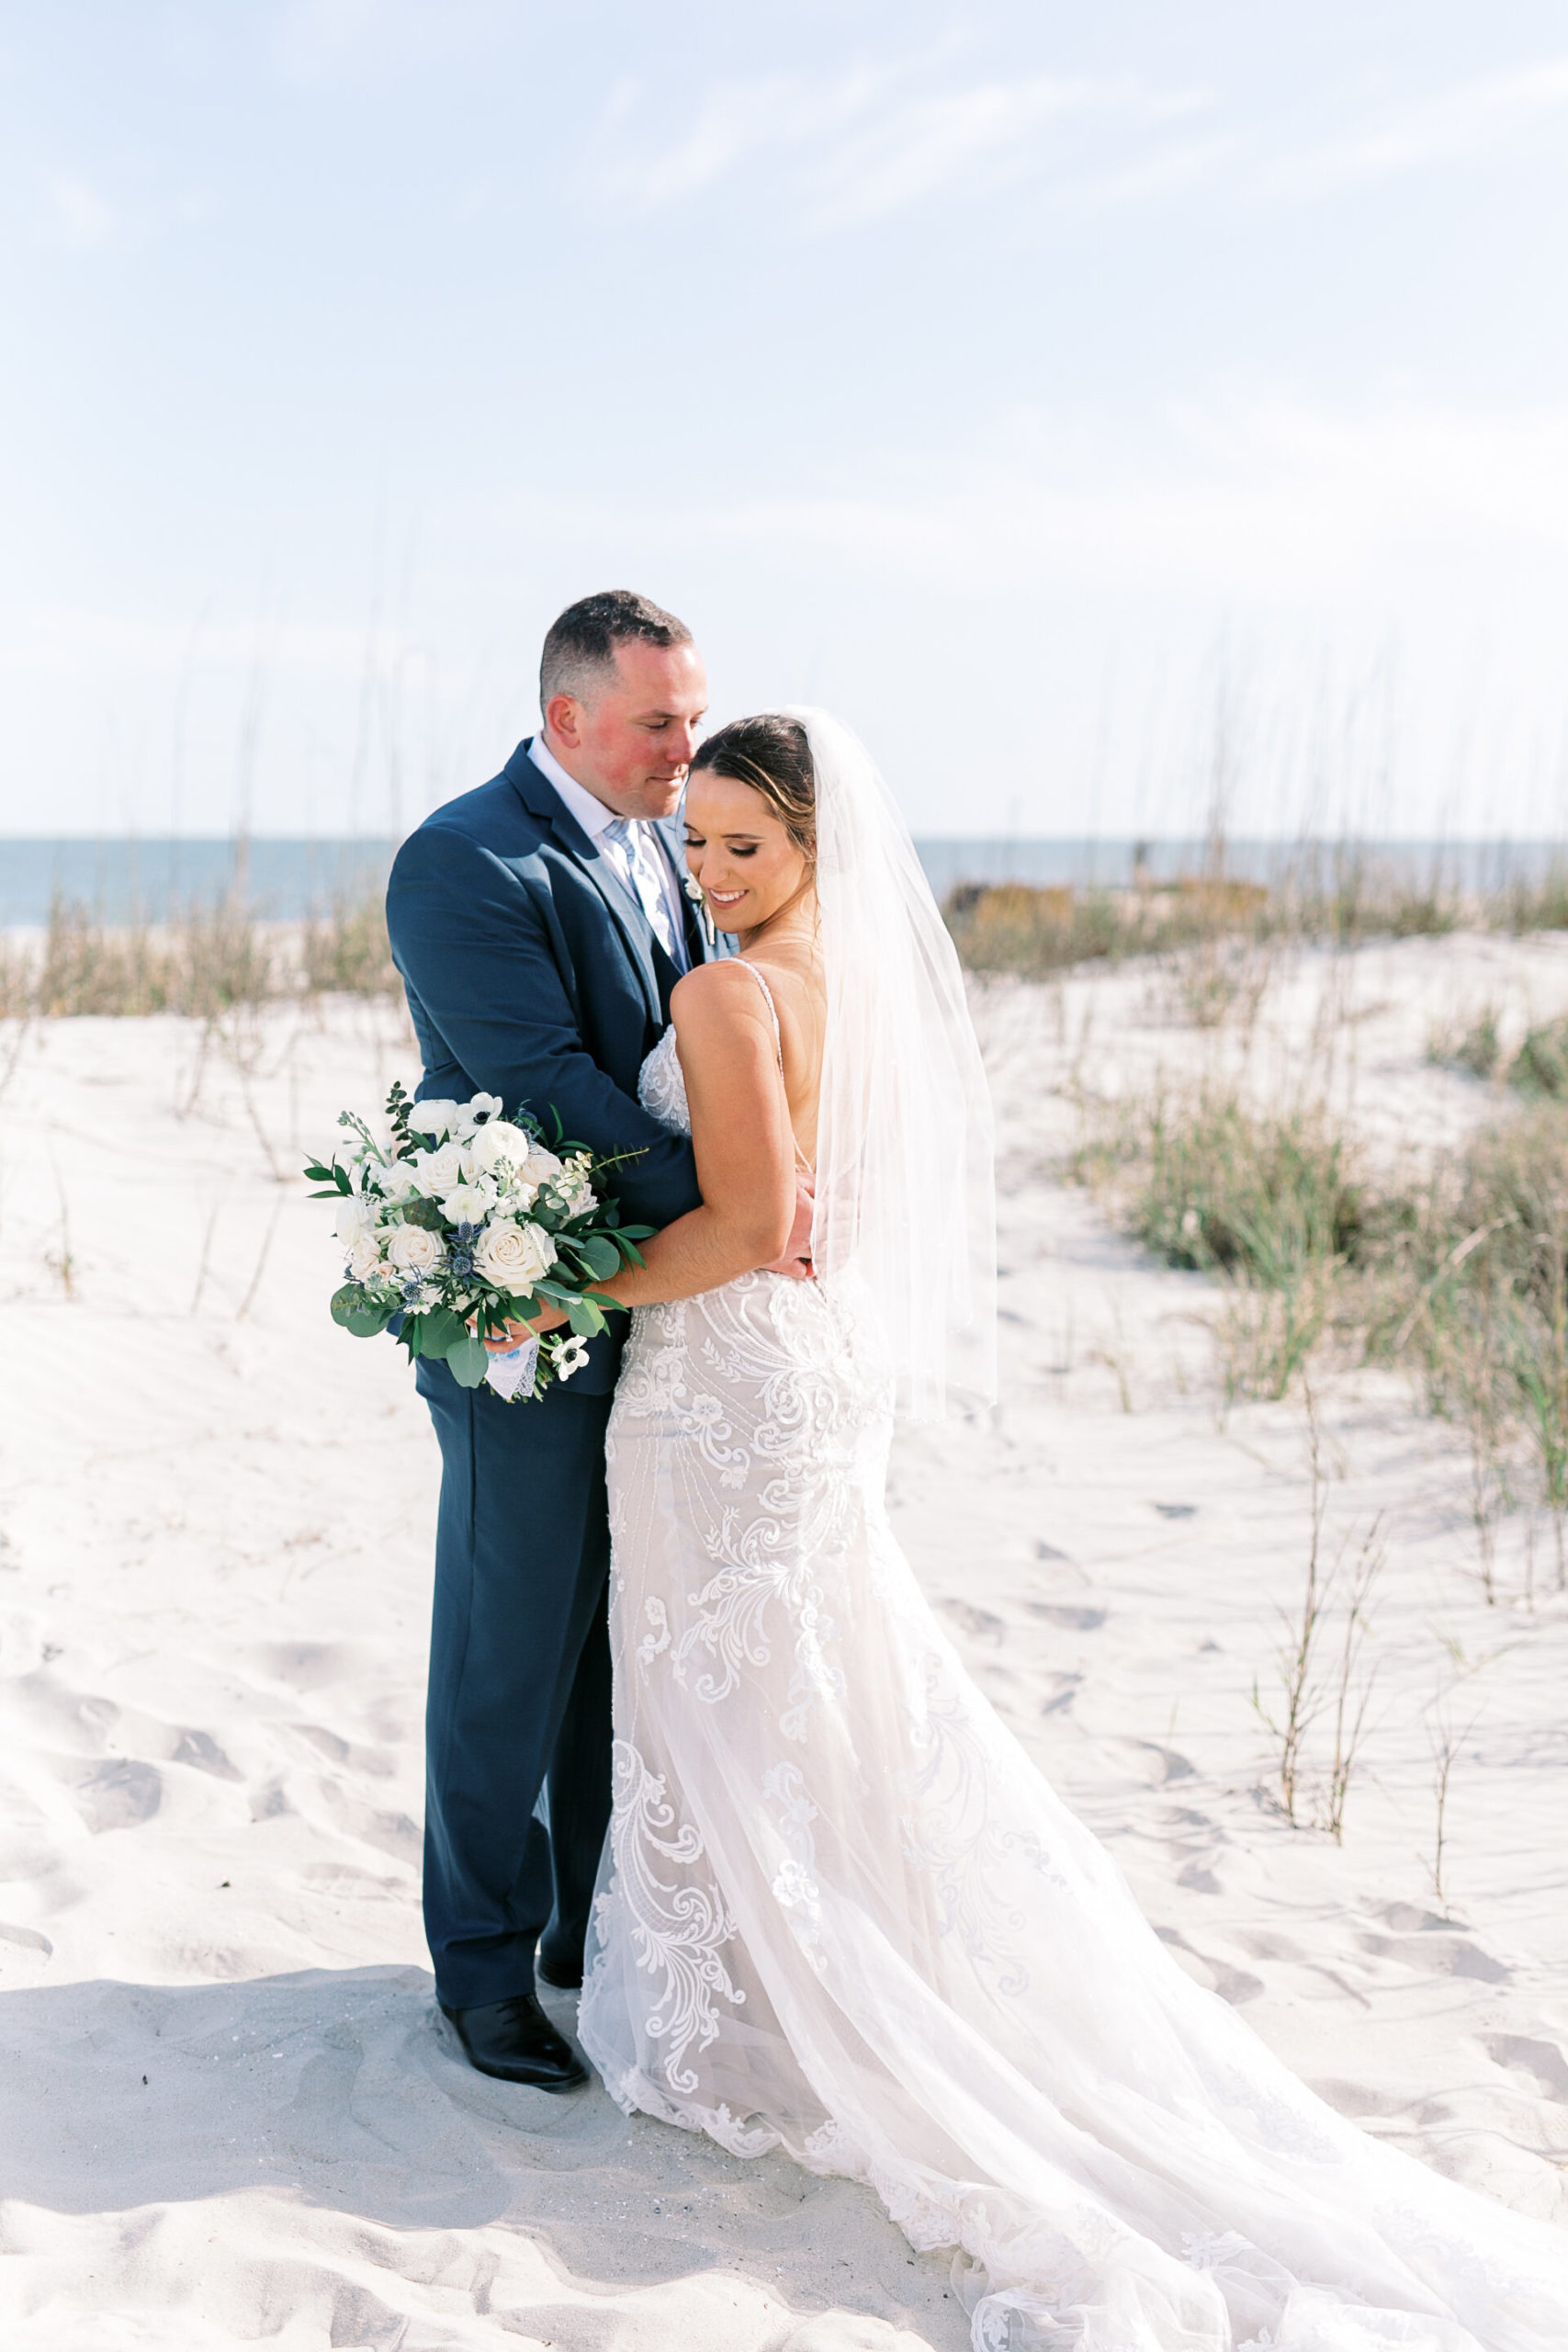 Bride and groom portraits from best wedding photographer Hilton Head Island, South Carolina.